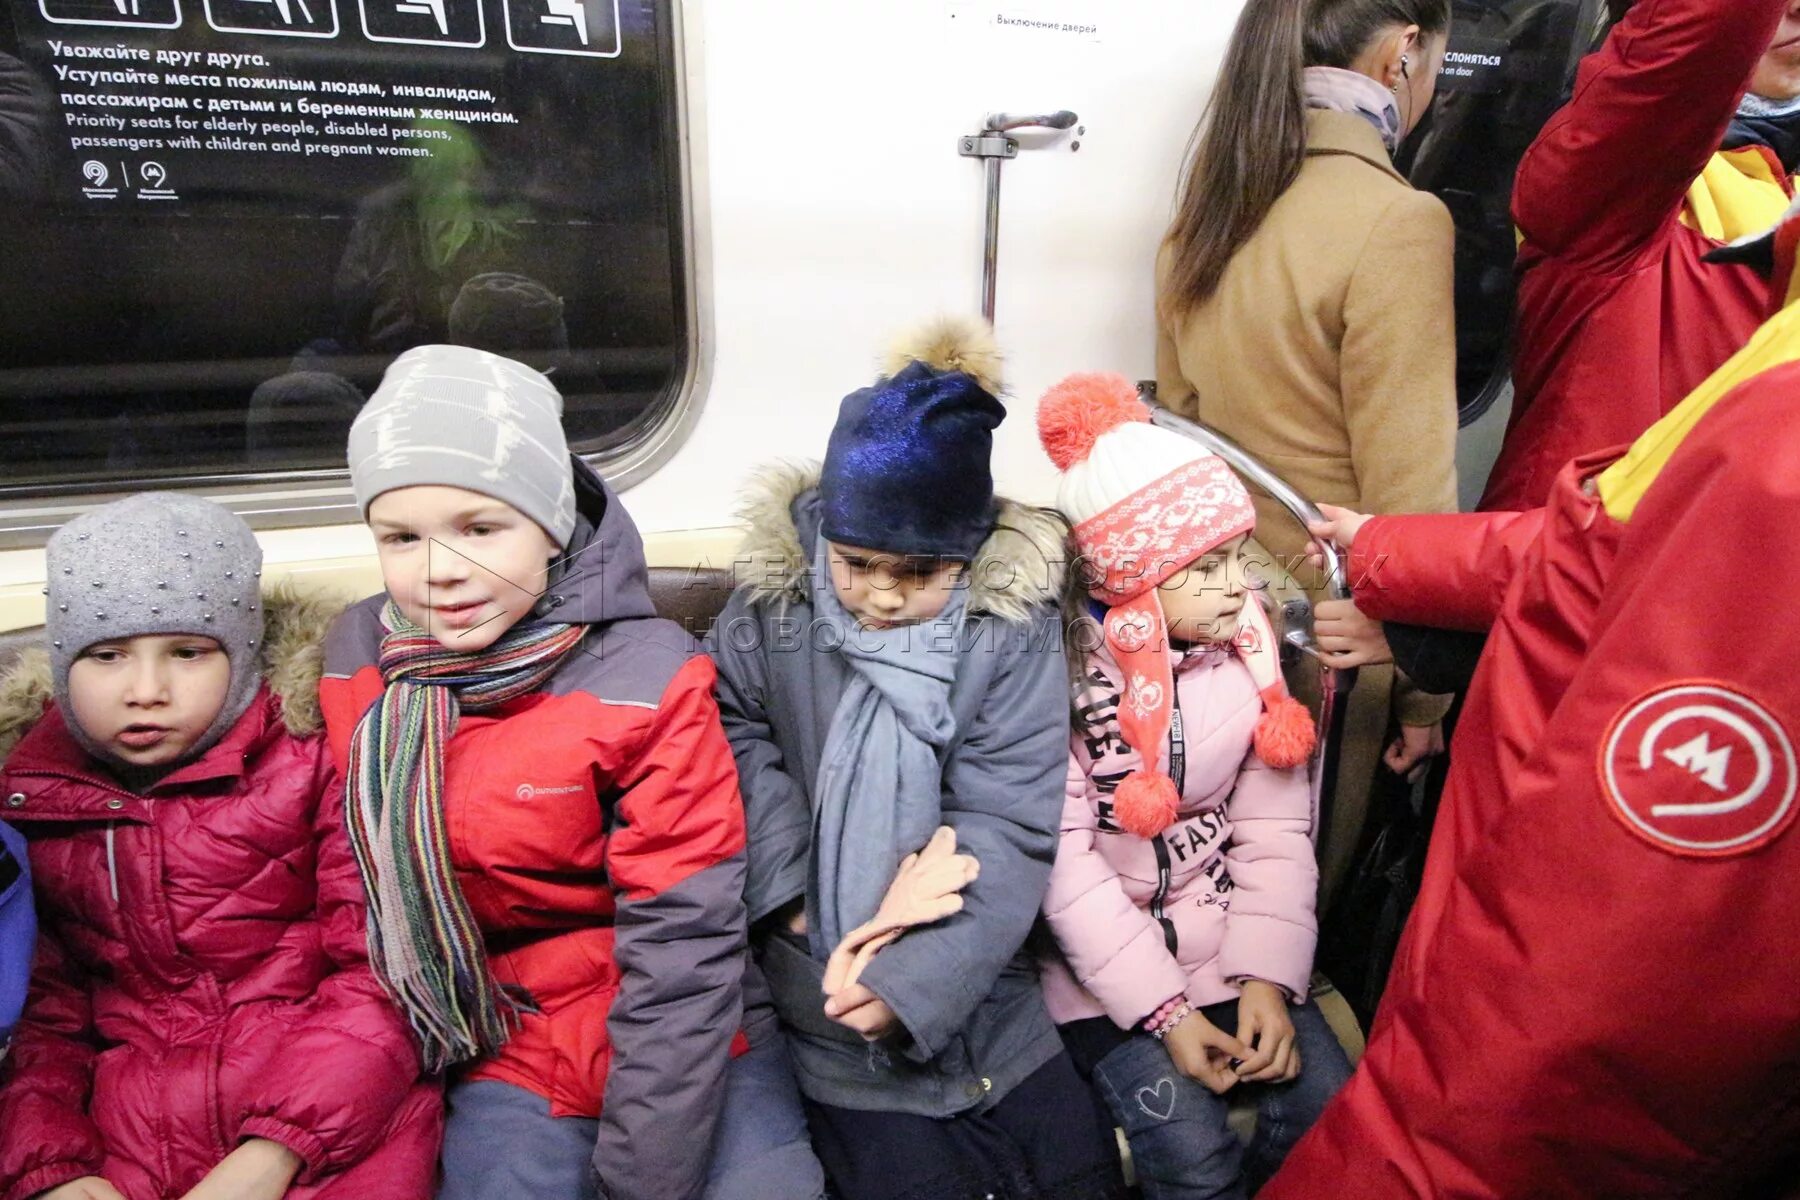 Метрополитен дети. Метро для детей. Дети в метро Москва. Школьники в метро. Ребенок один в метро.